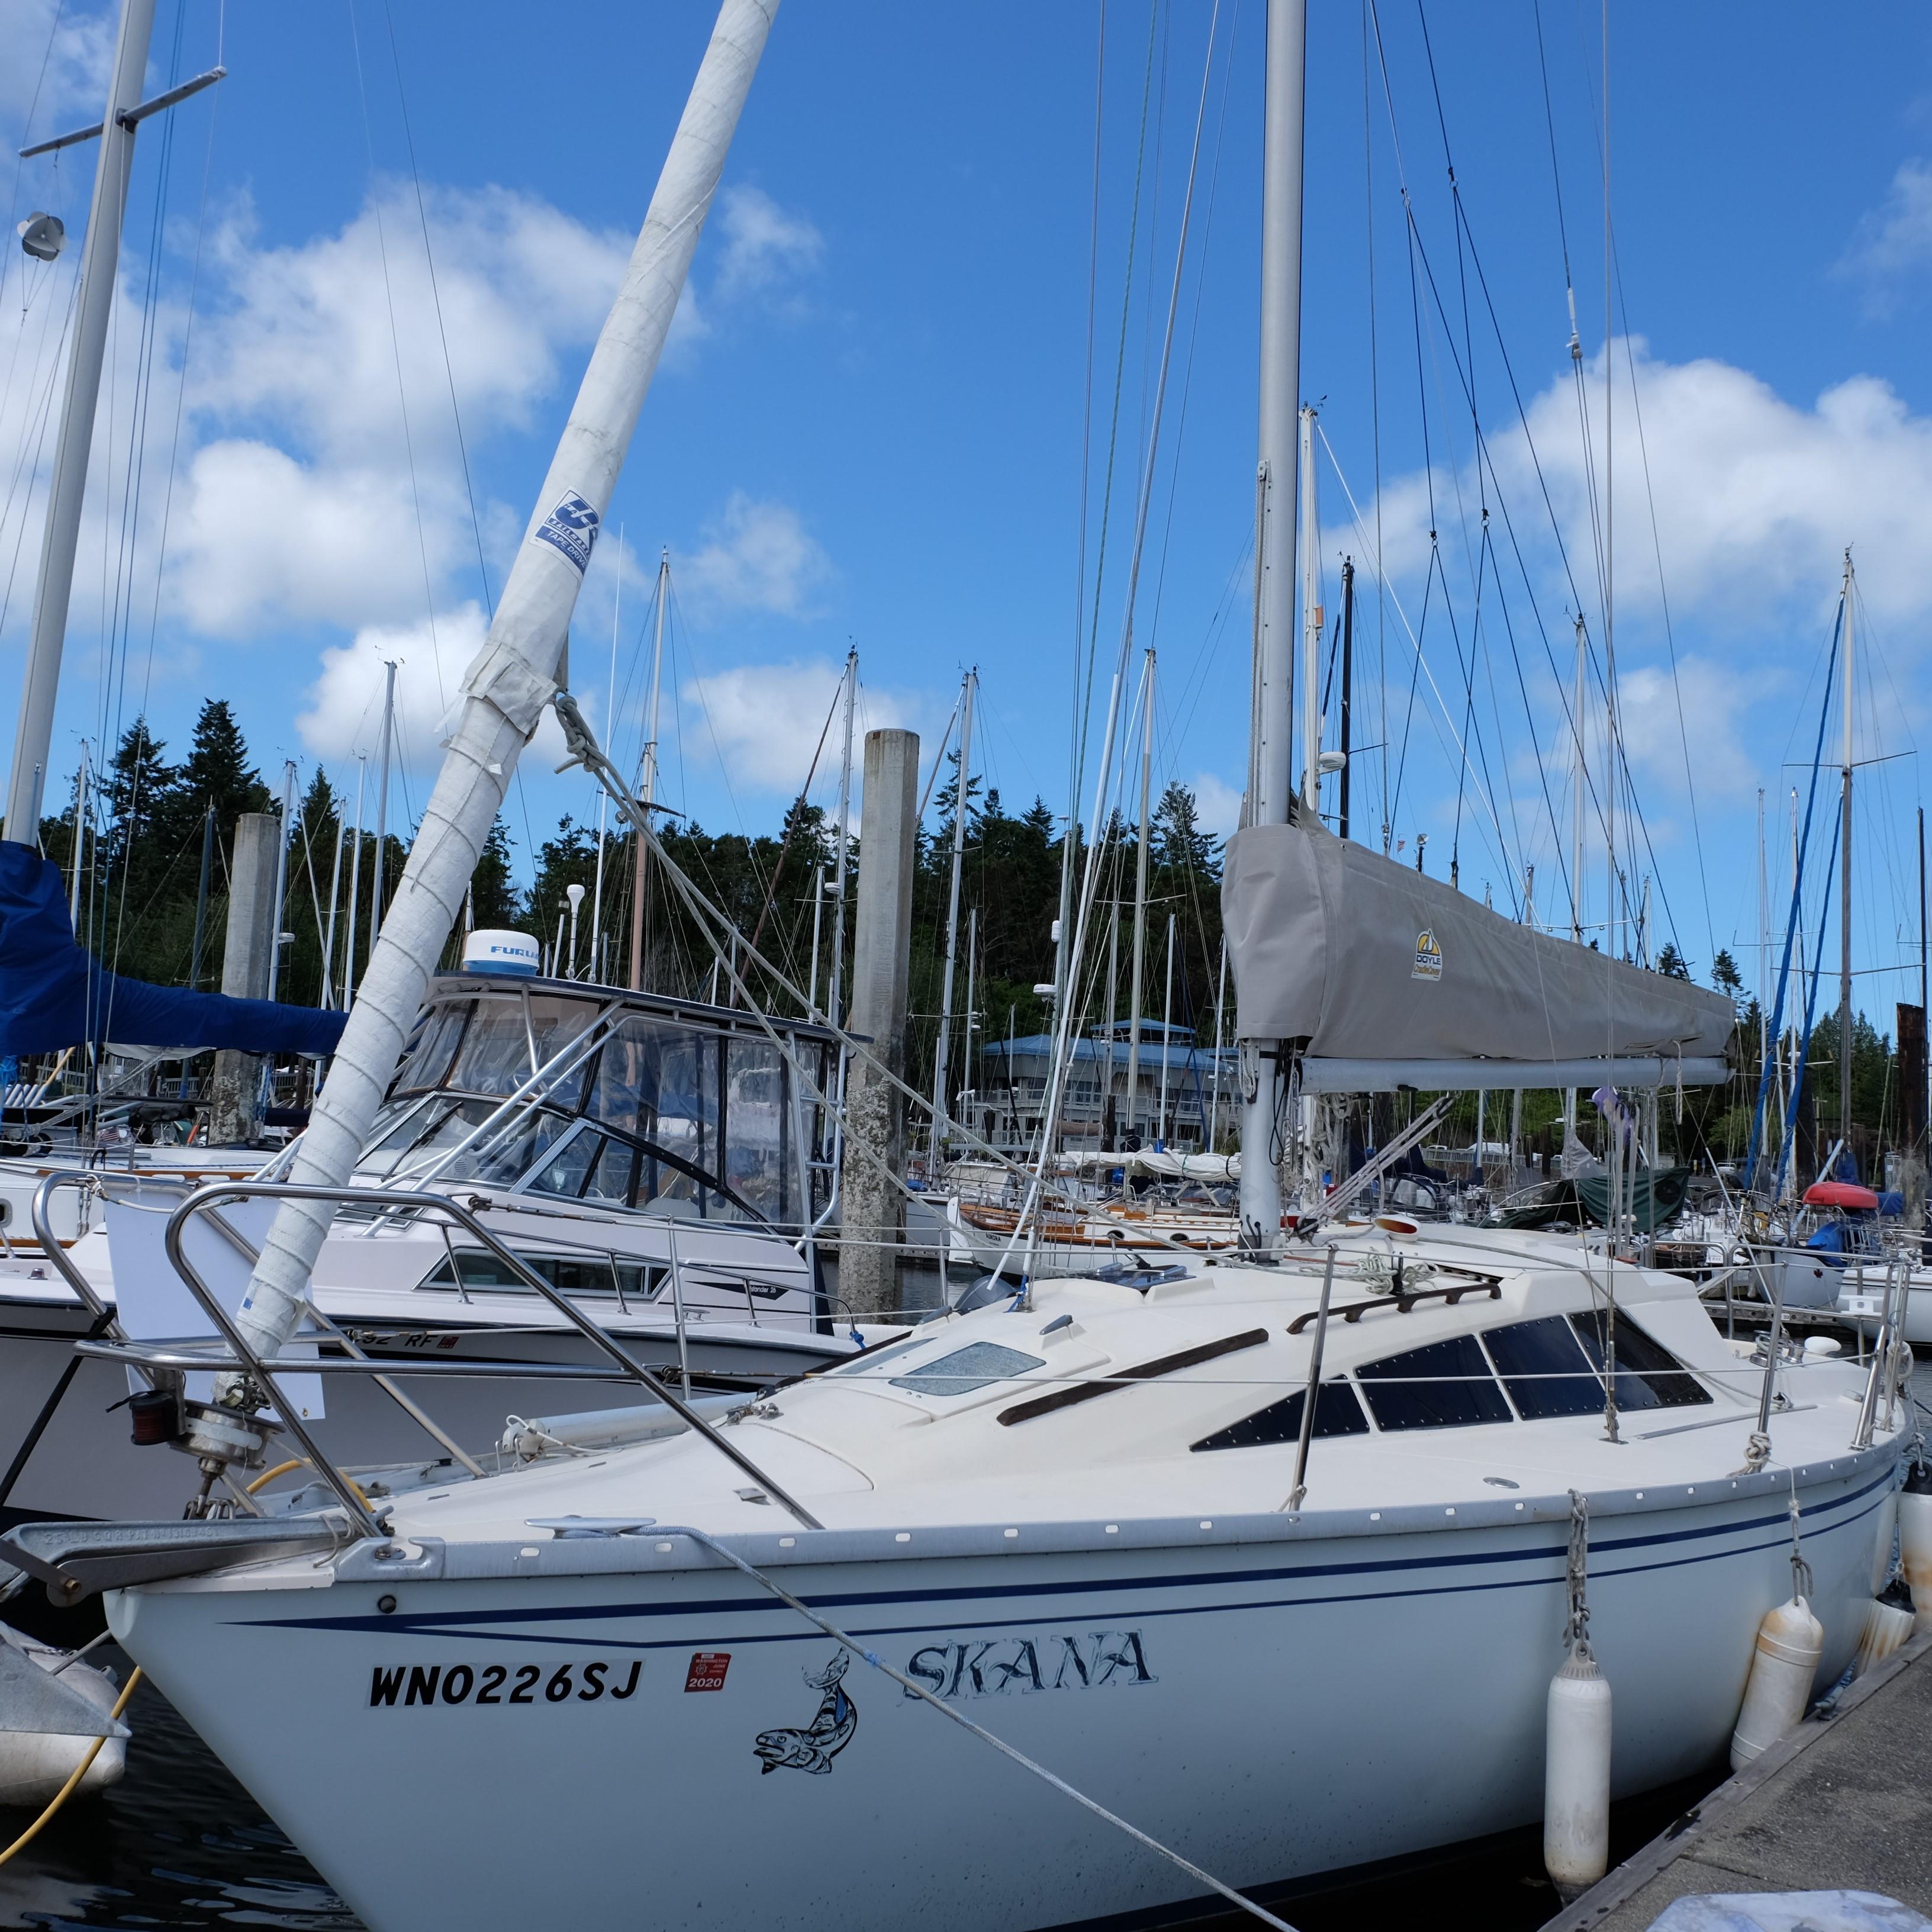 sailboat for sale washington state